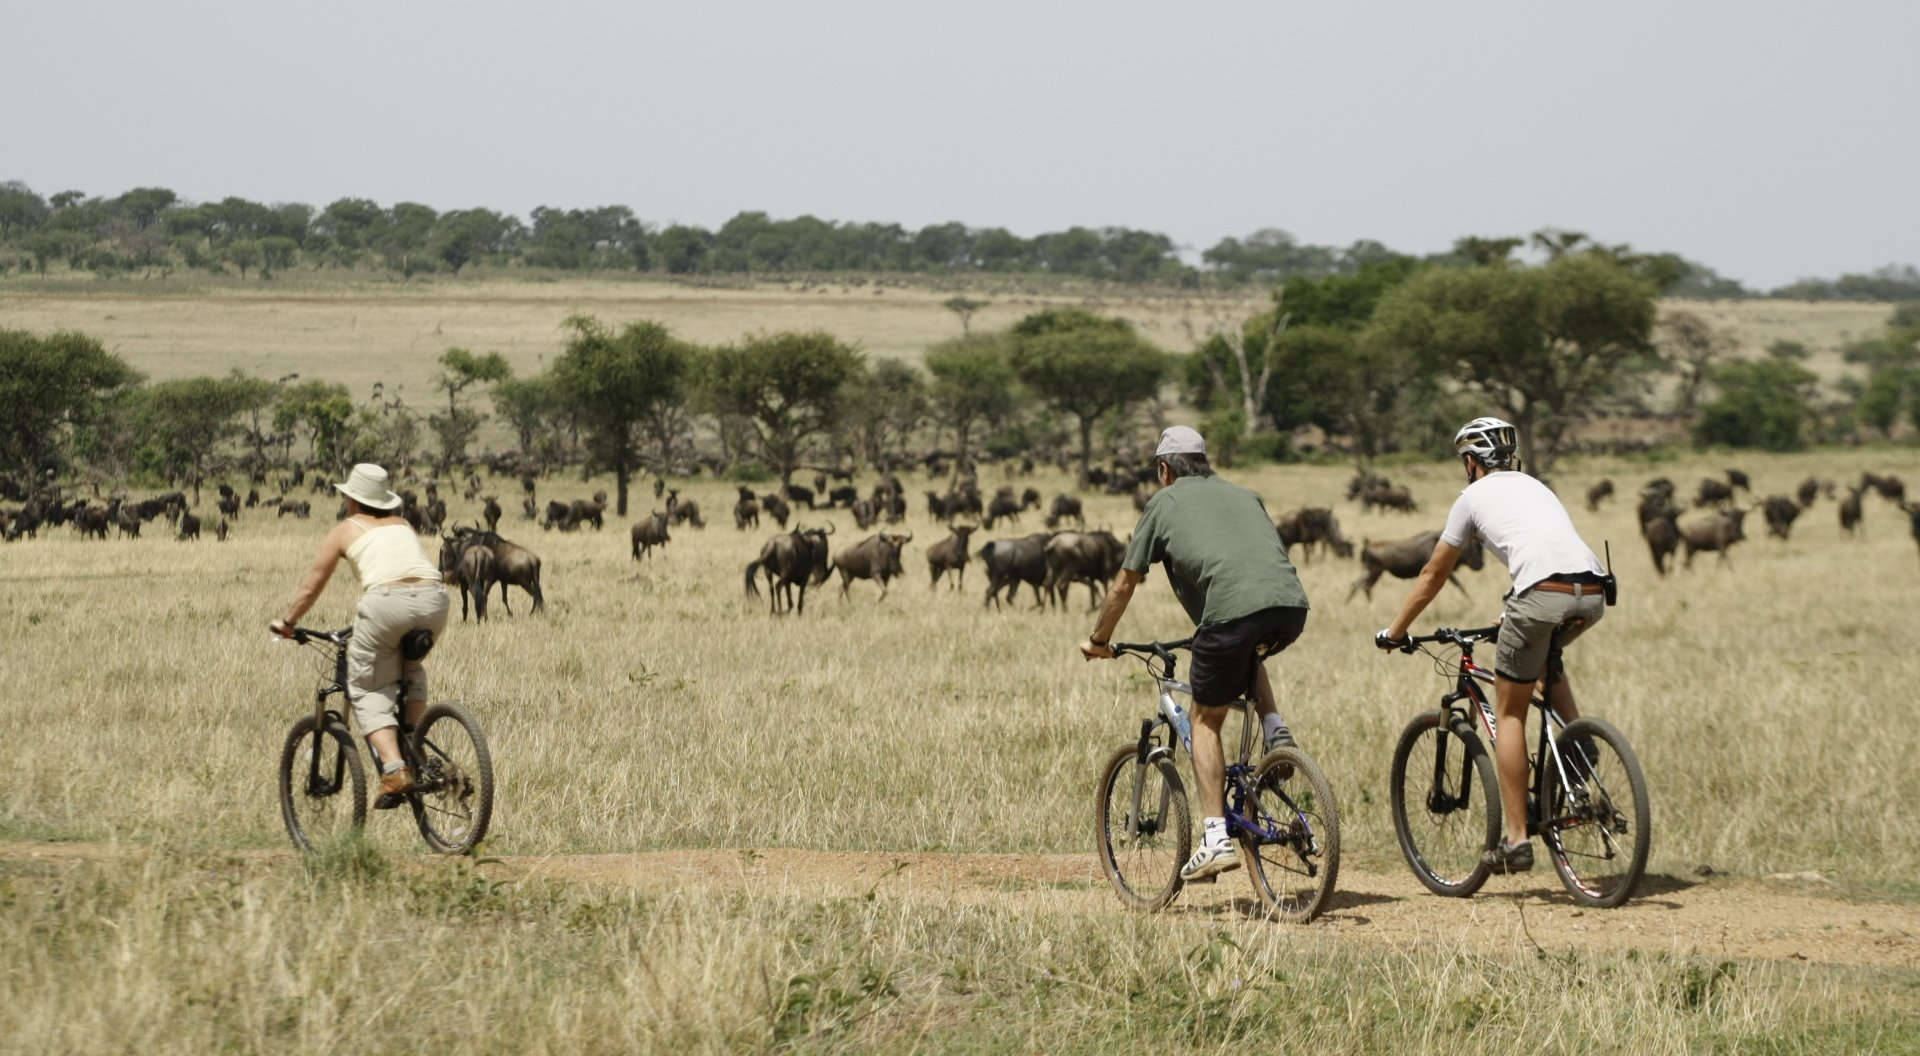 African Safari, wildebeest migration, bicycle safari